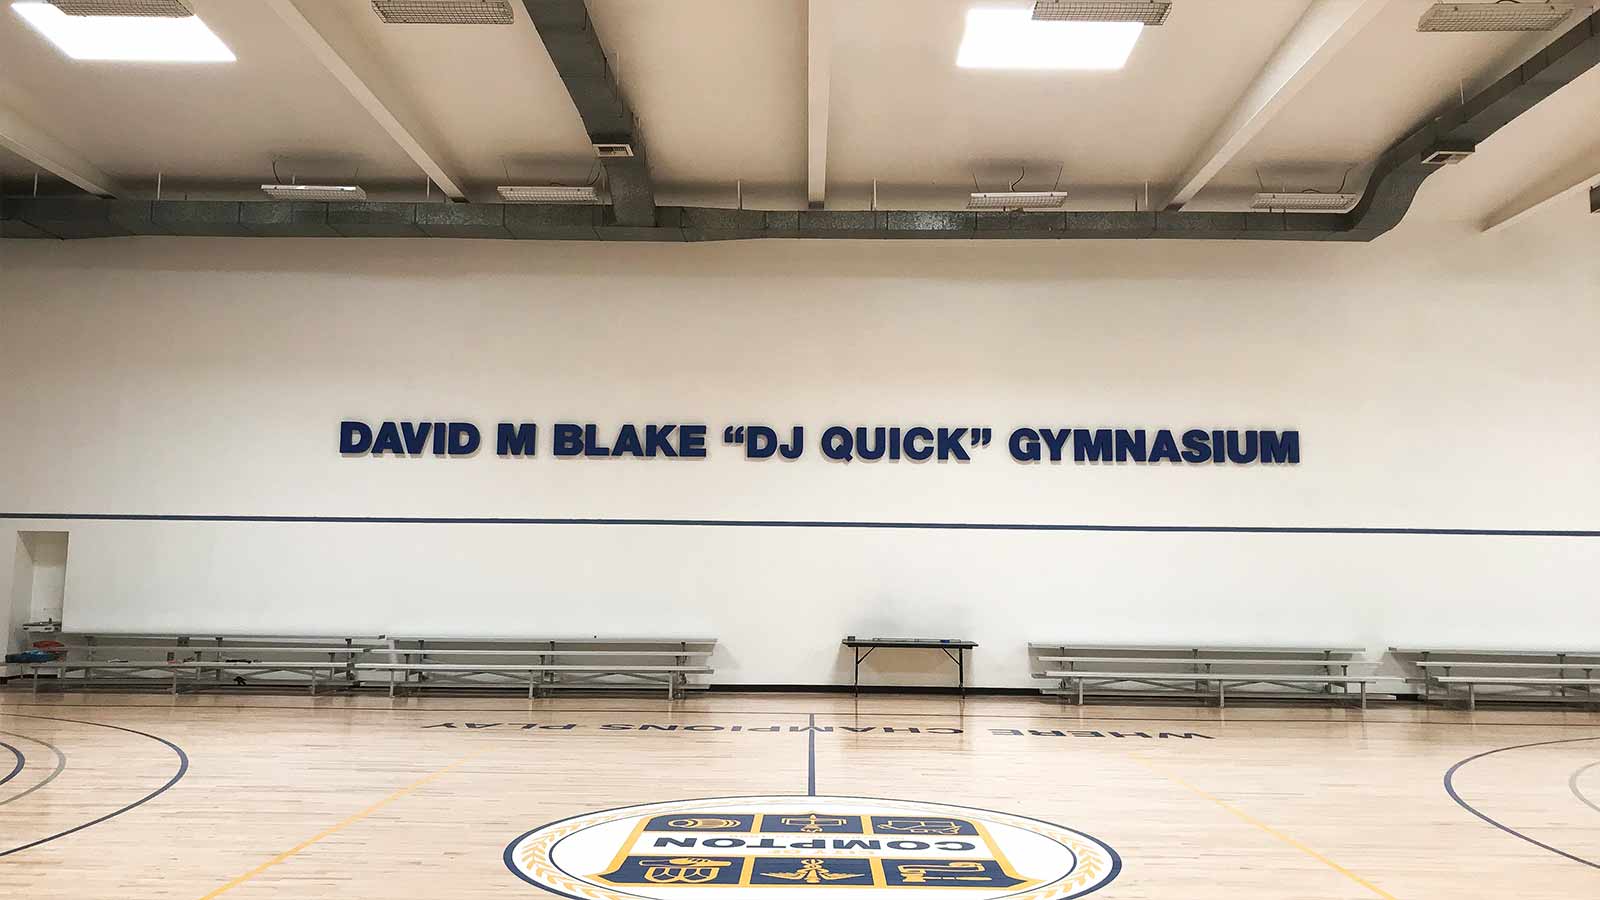 david m blake gymnasium 3d letters